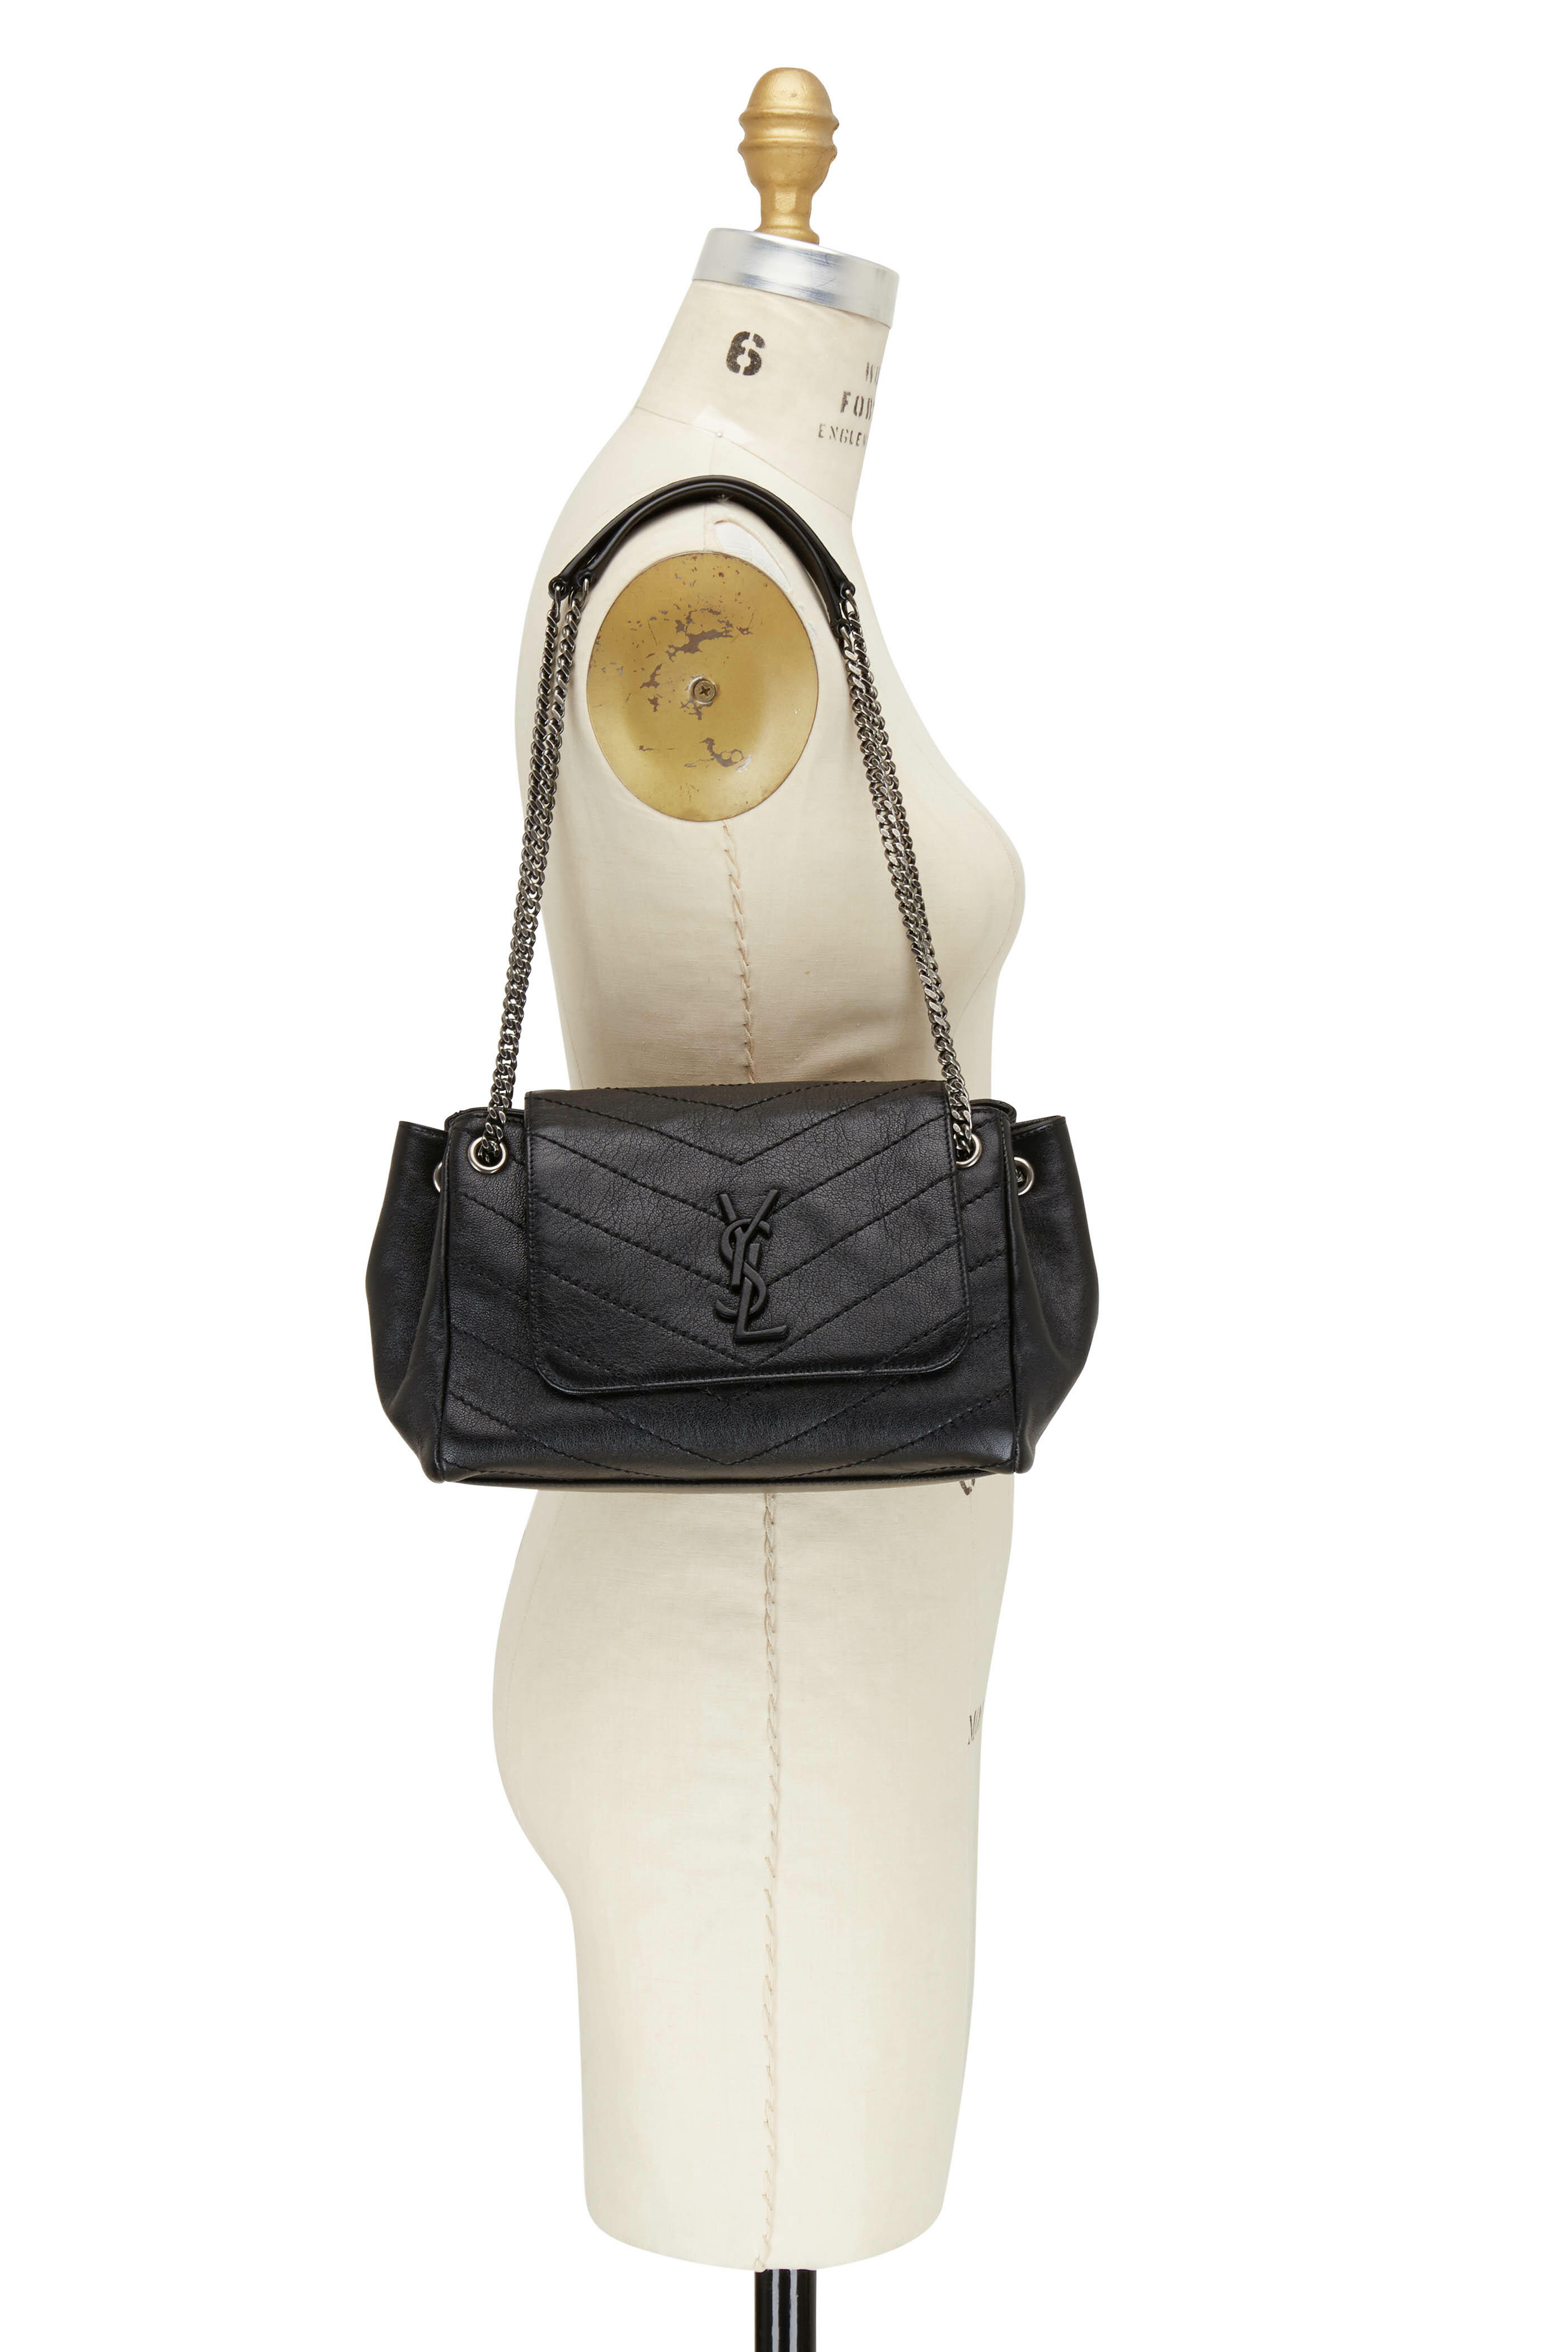 Saint Laurent - Nolita Monogram Black Vintage Leather Large Bag